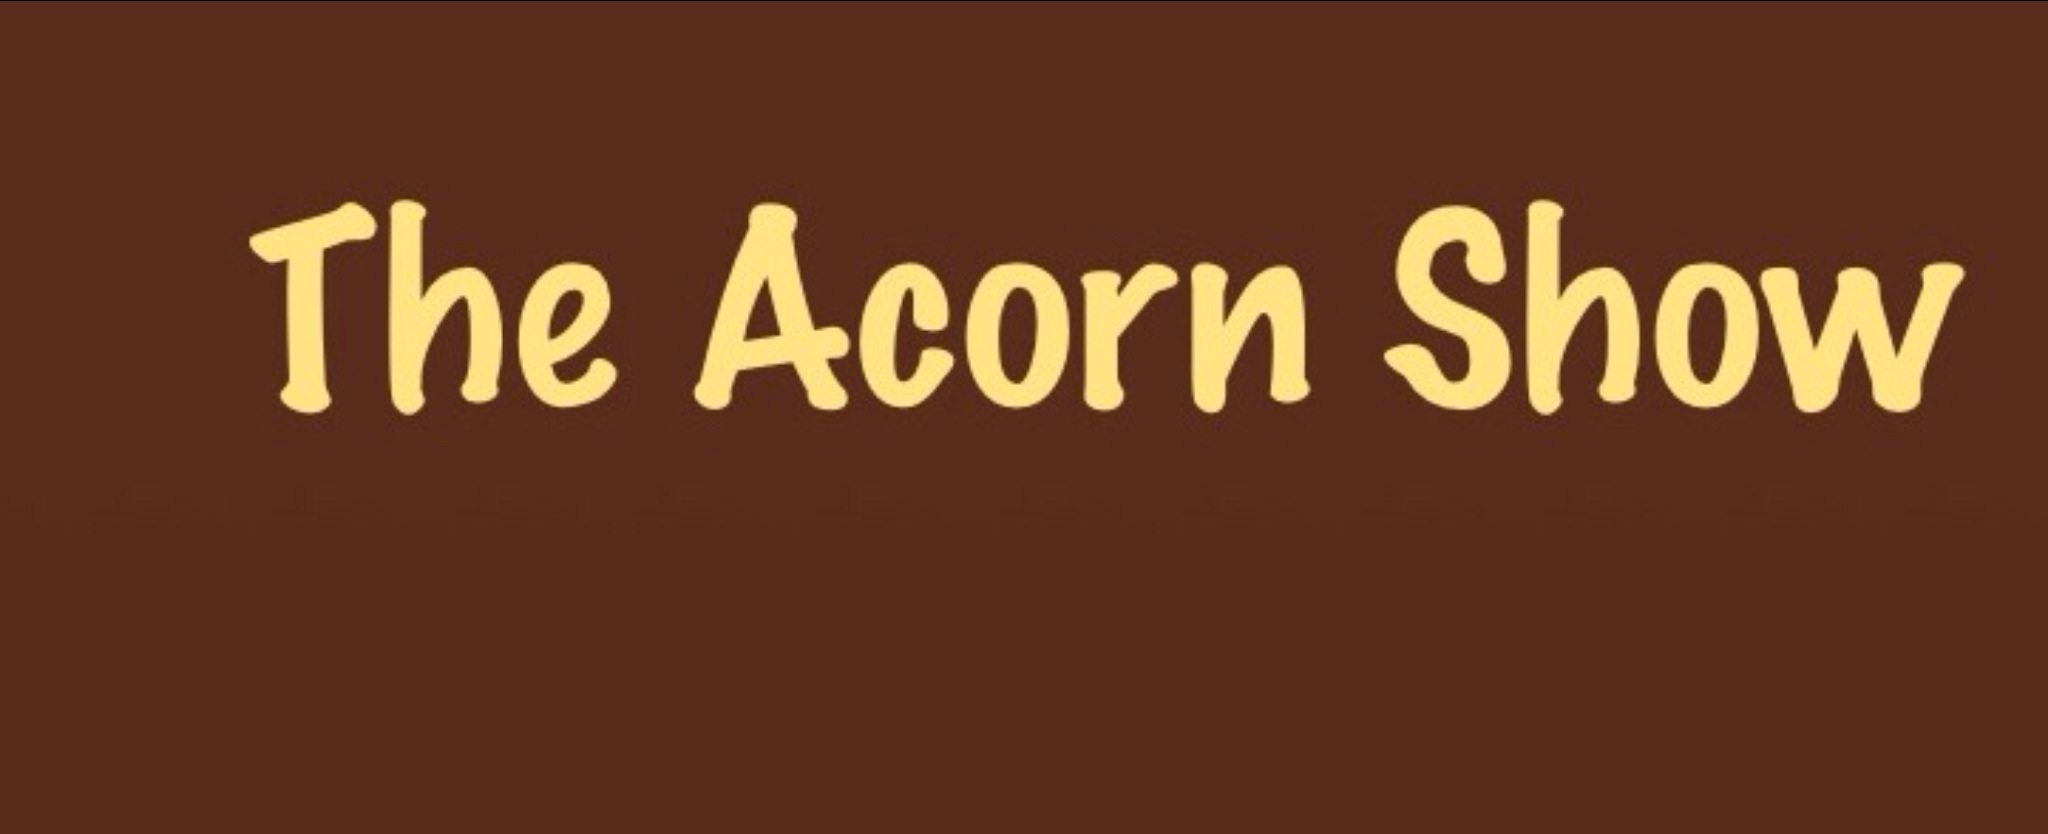 acorn shows